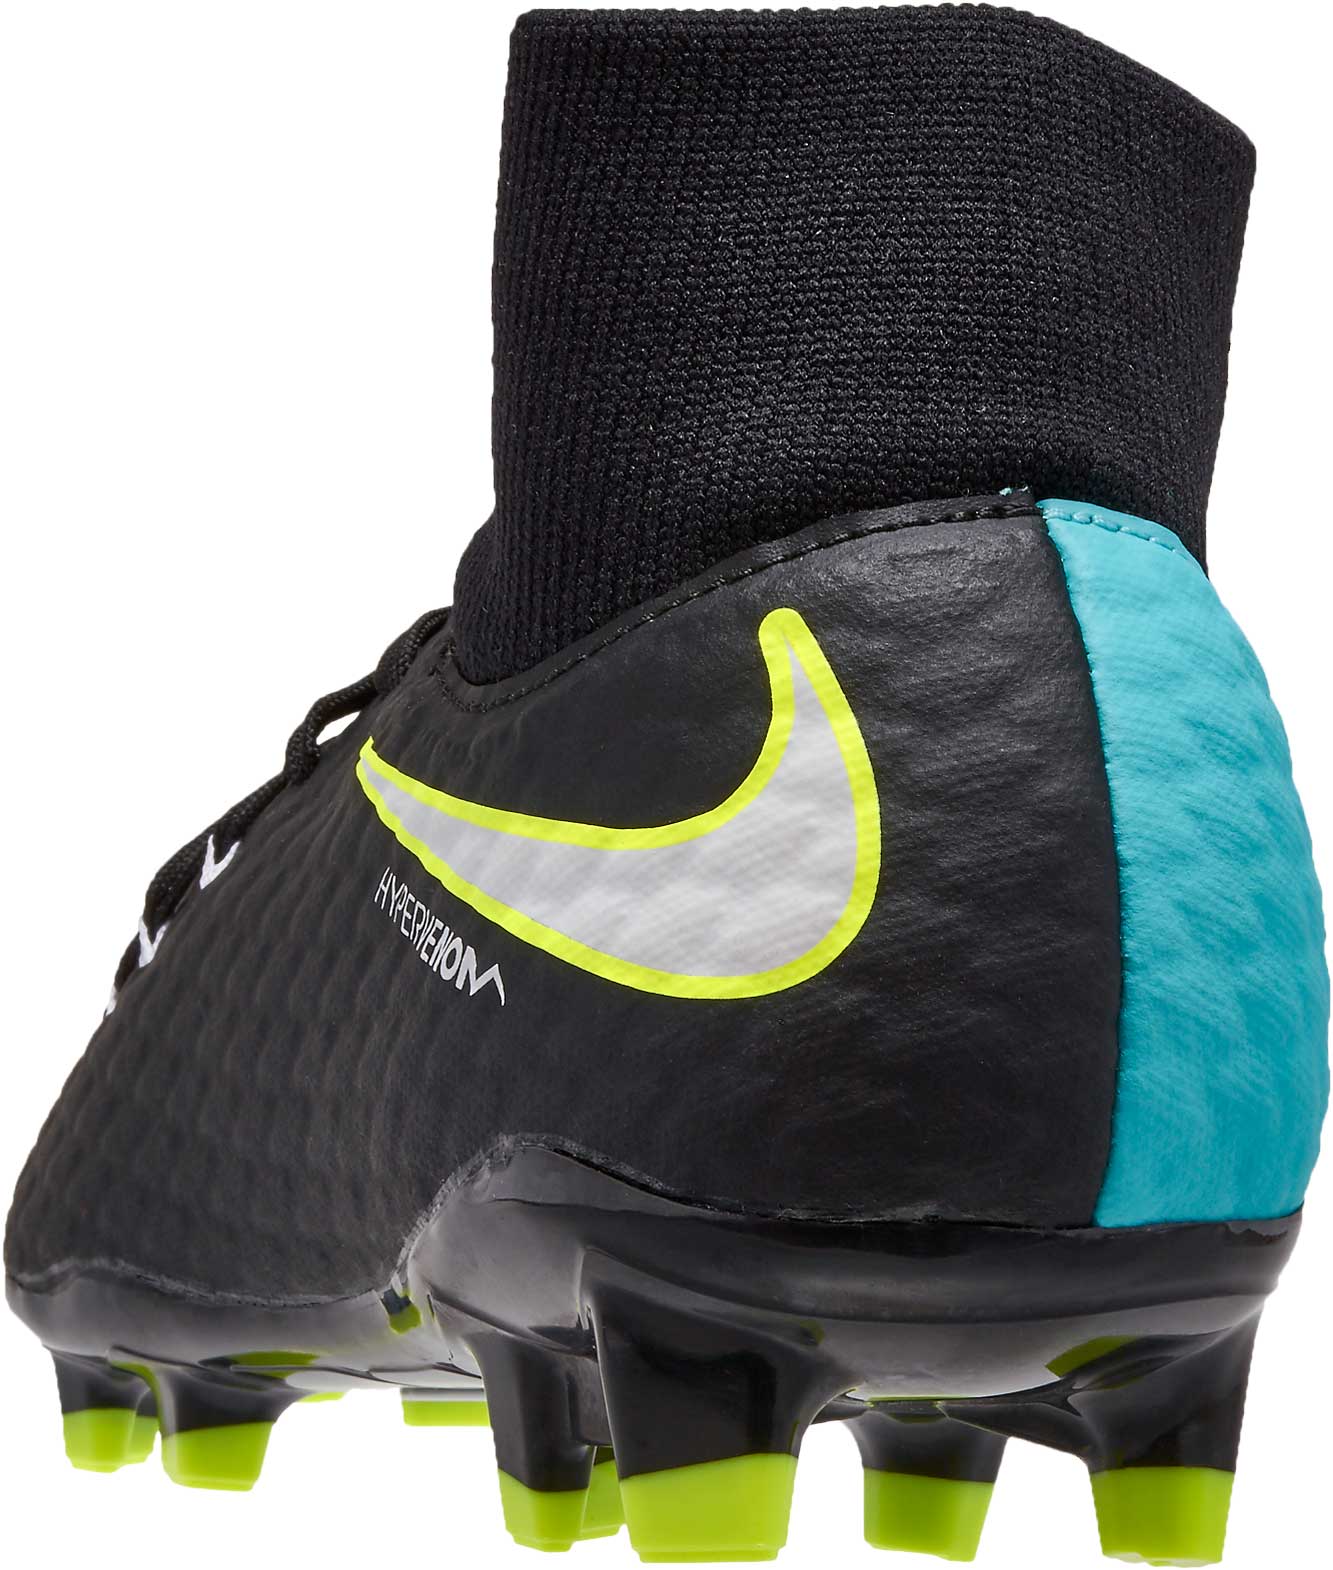 Light Aqua Nike Phelon III DF FG Soccer Shoes - SoccerPro.com